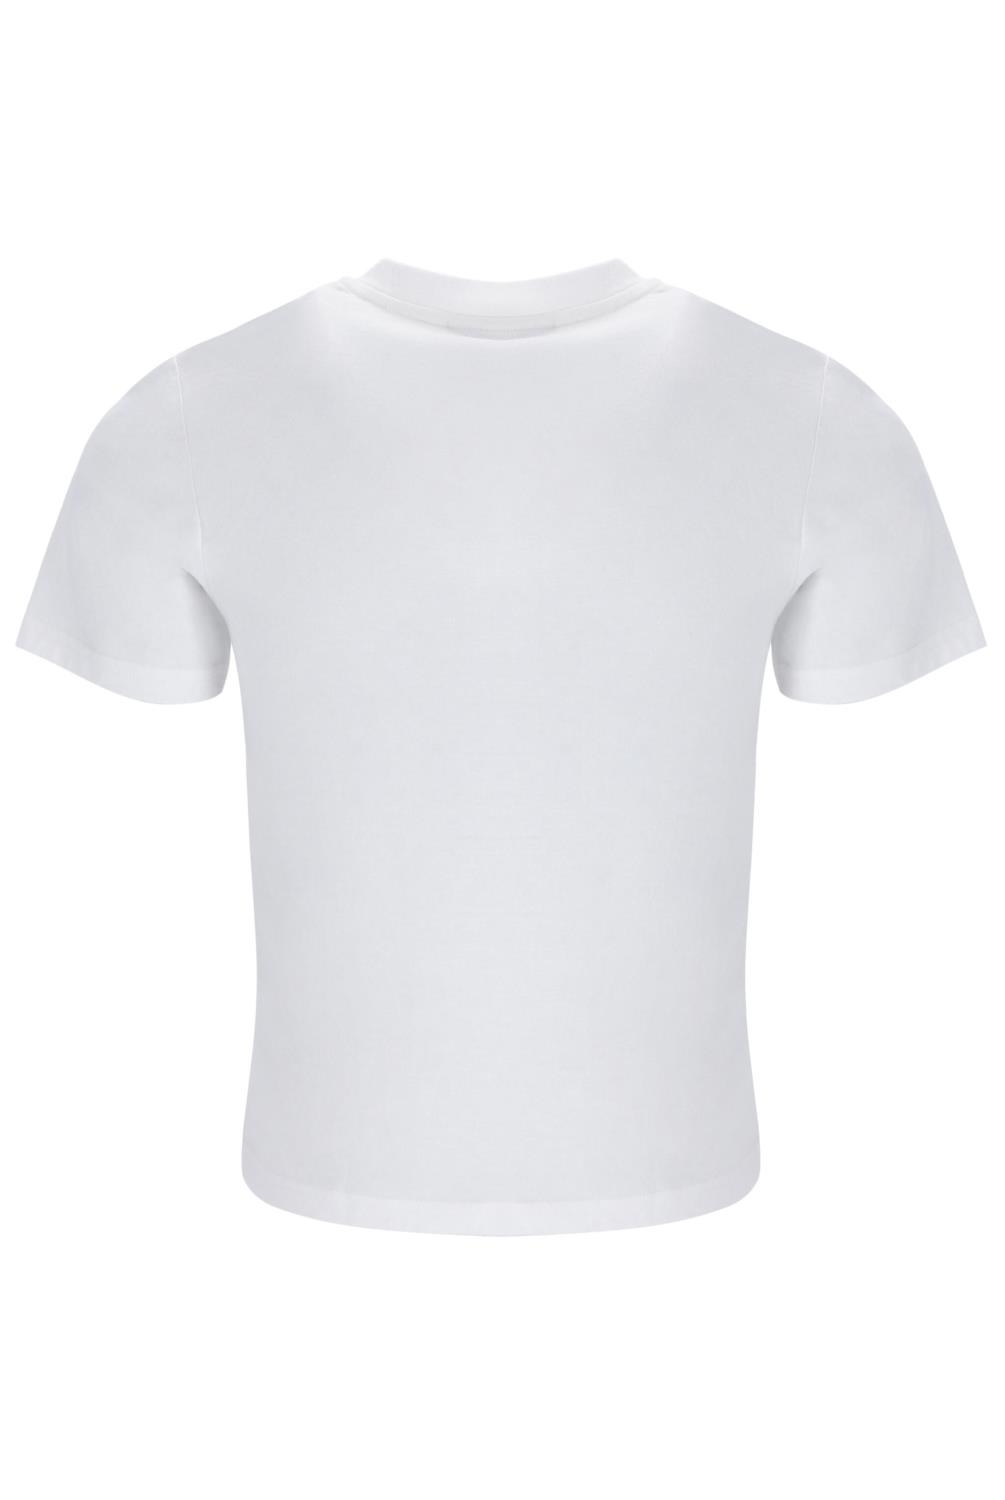 gallery-4397-for-Hysteris Bloom Tshirt White